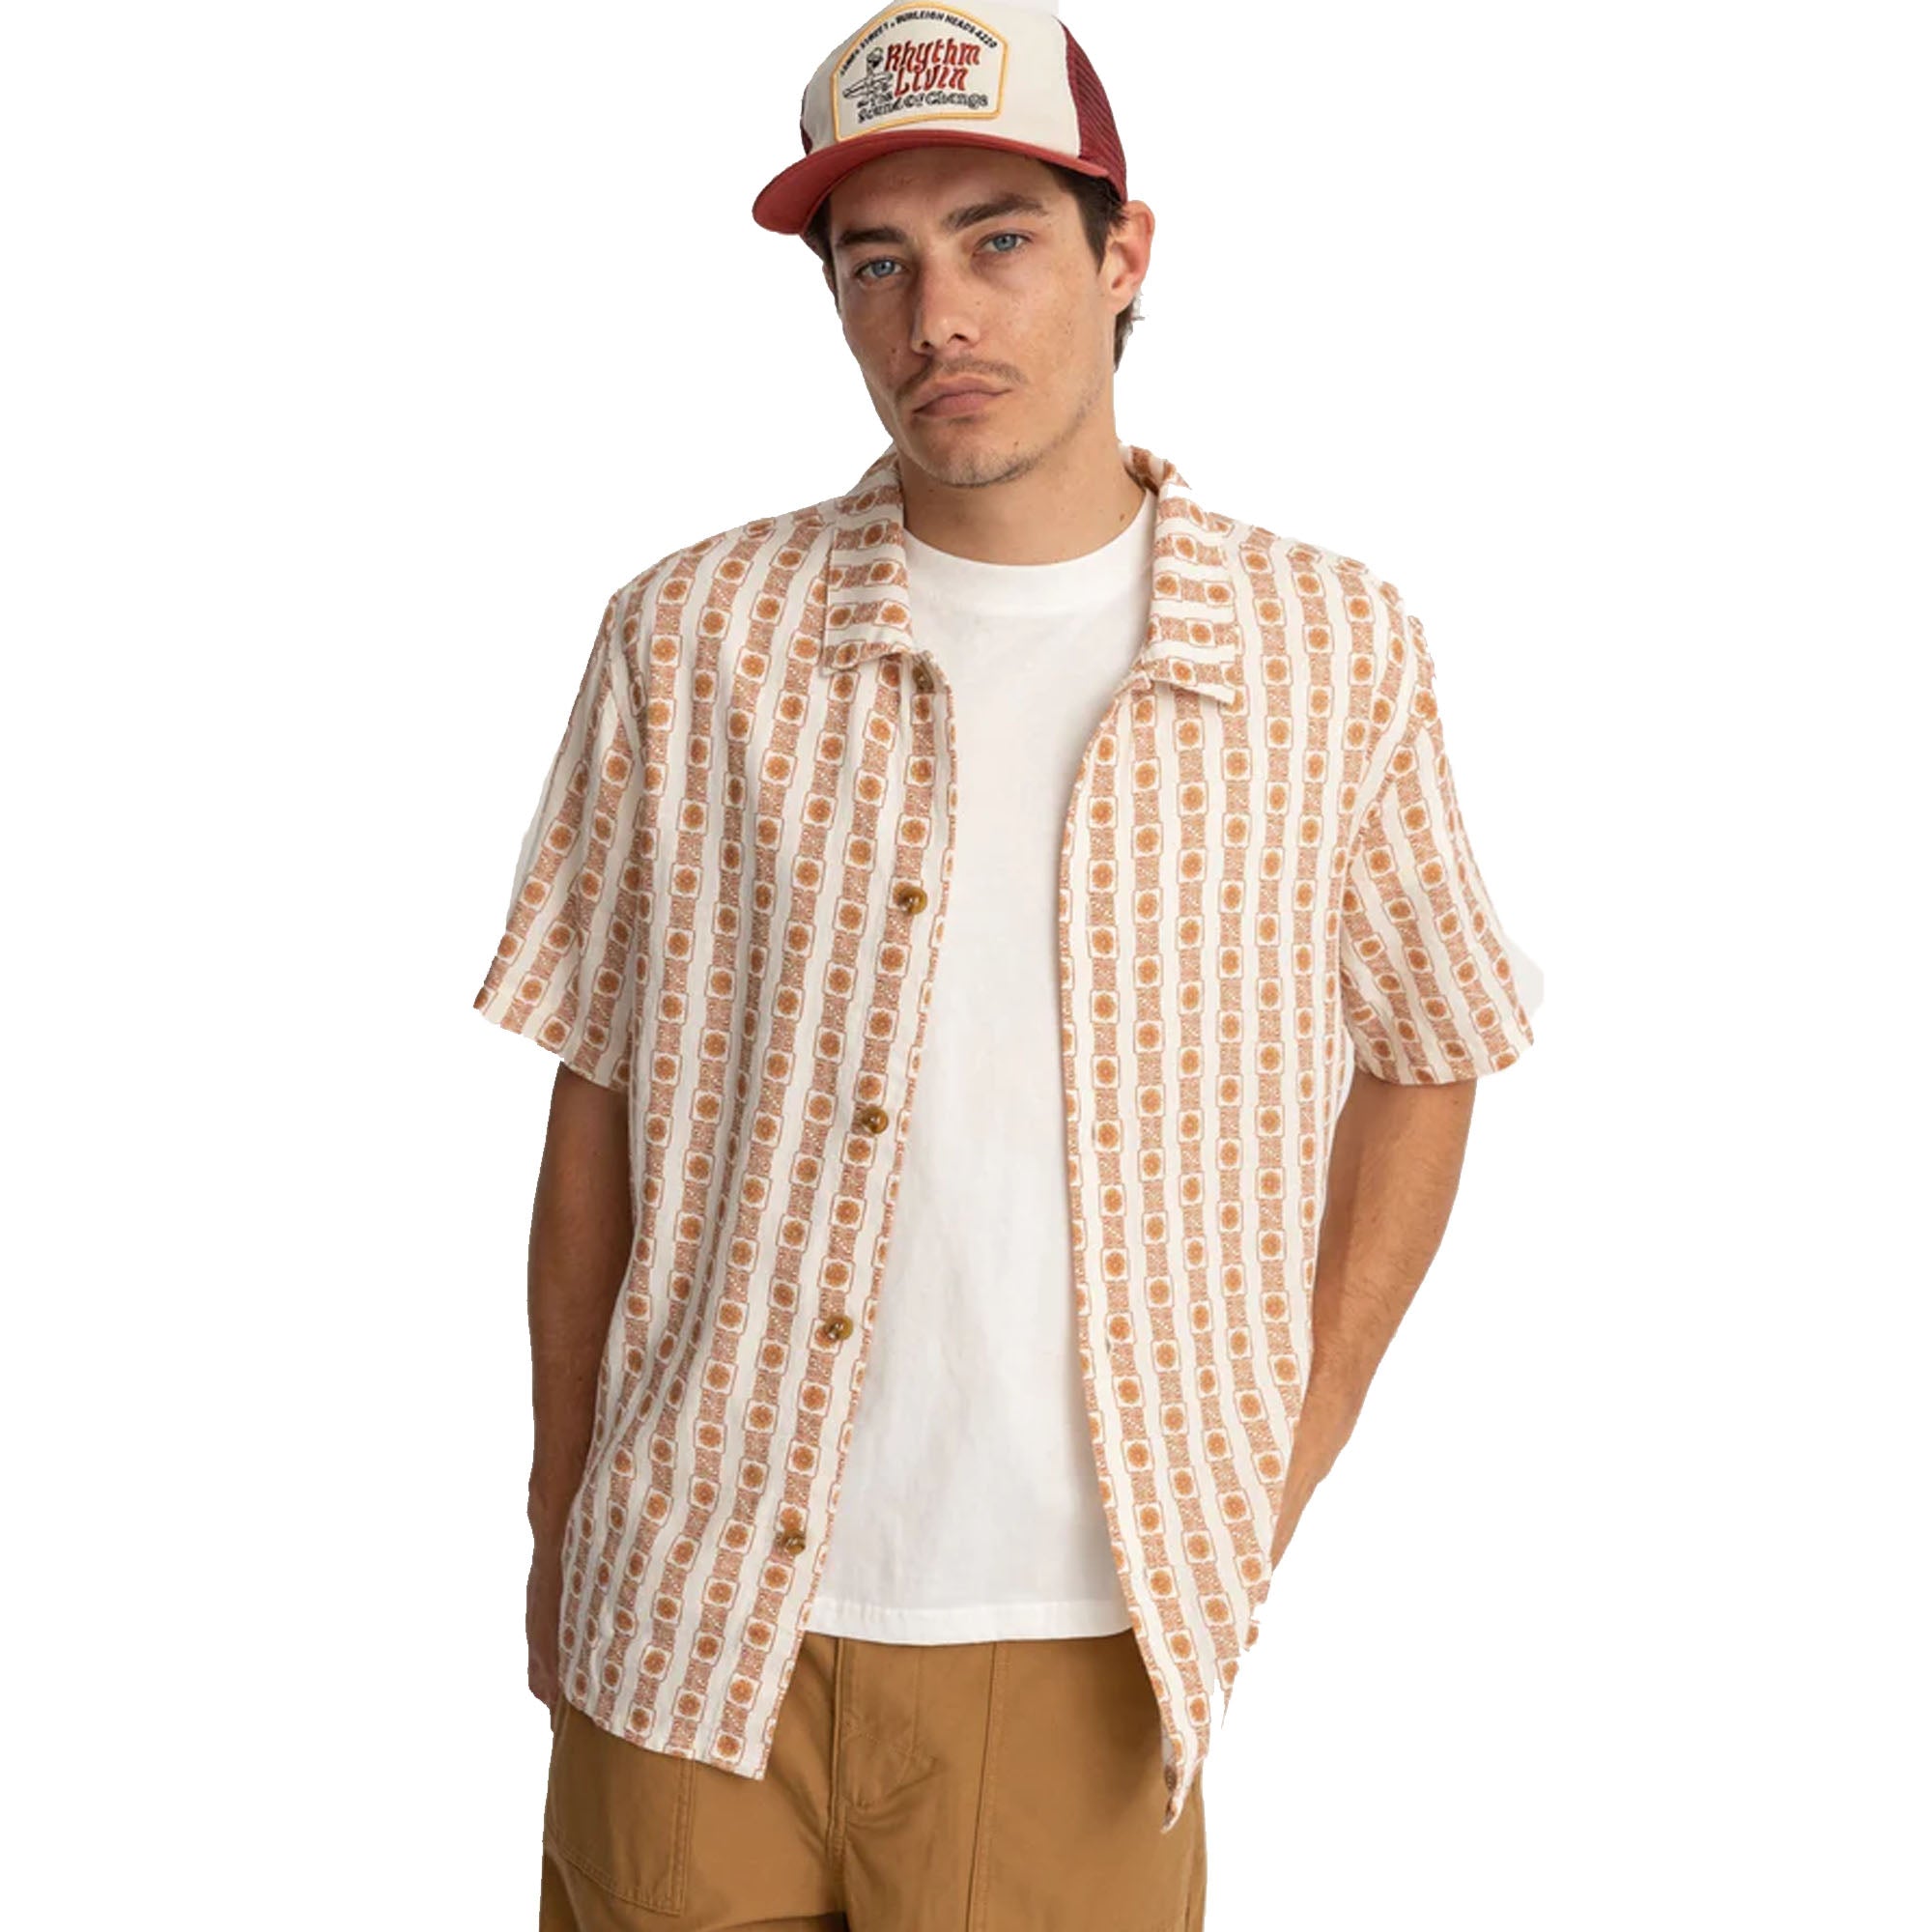 Rhythm Tile Stripe Men's S/S Dress Shirt